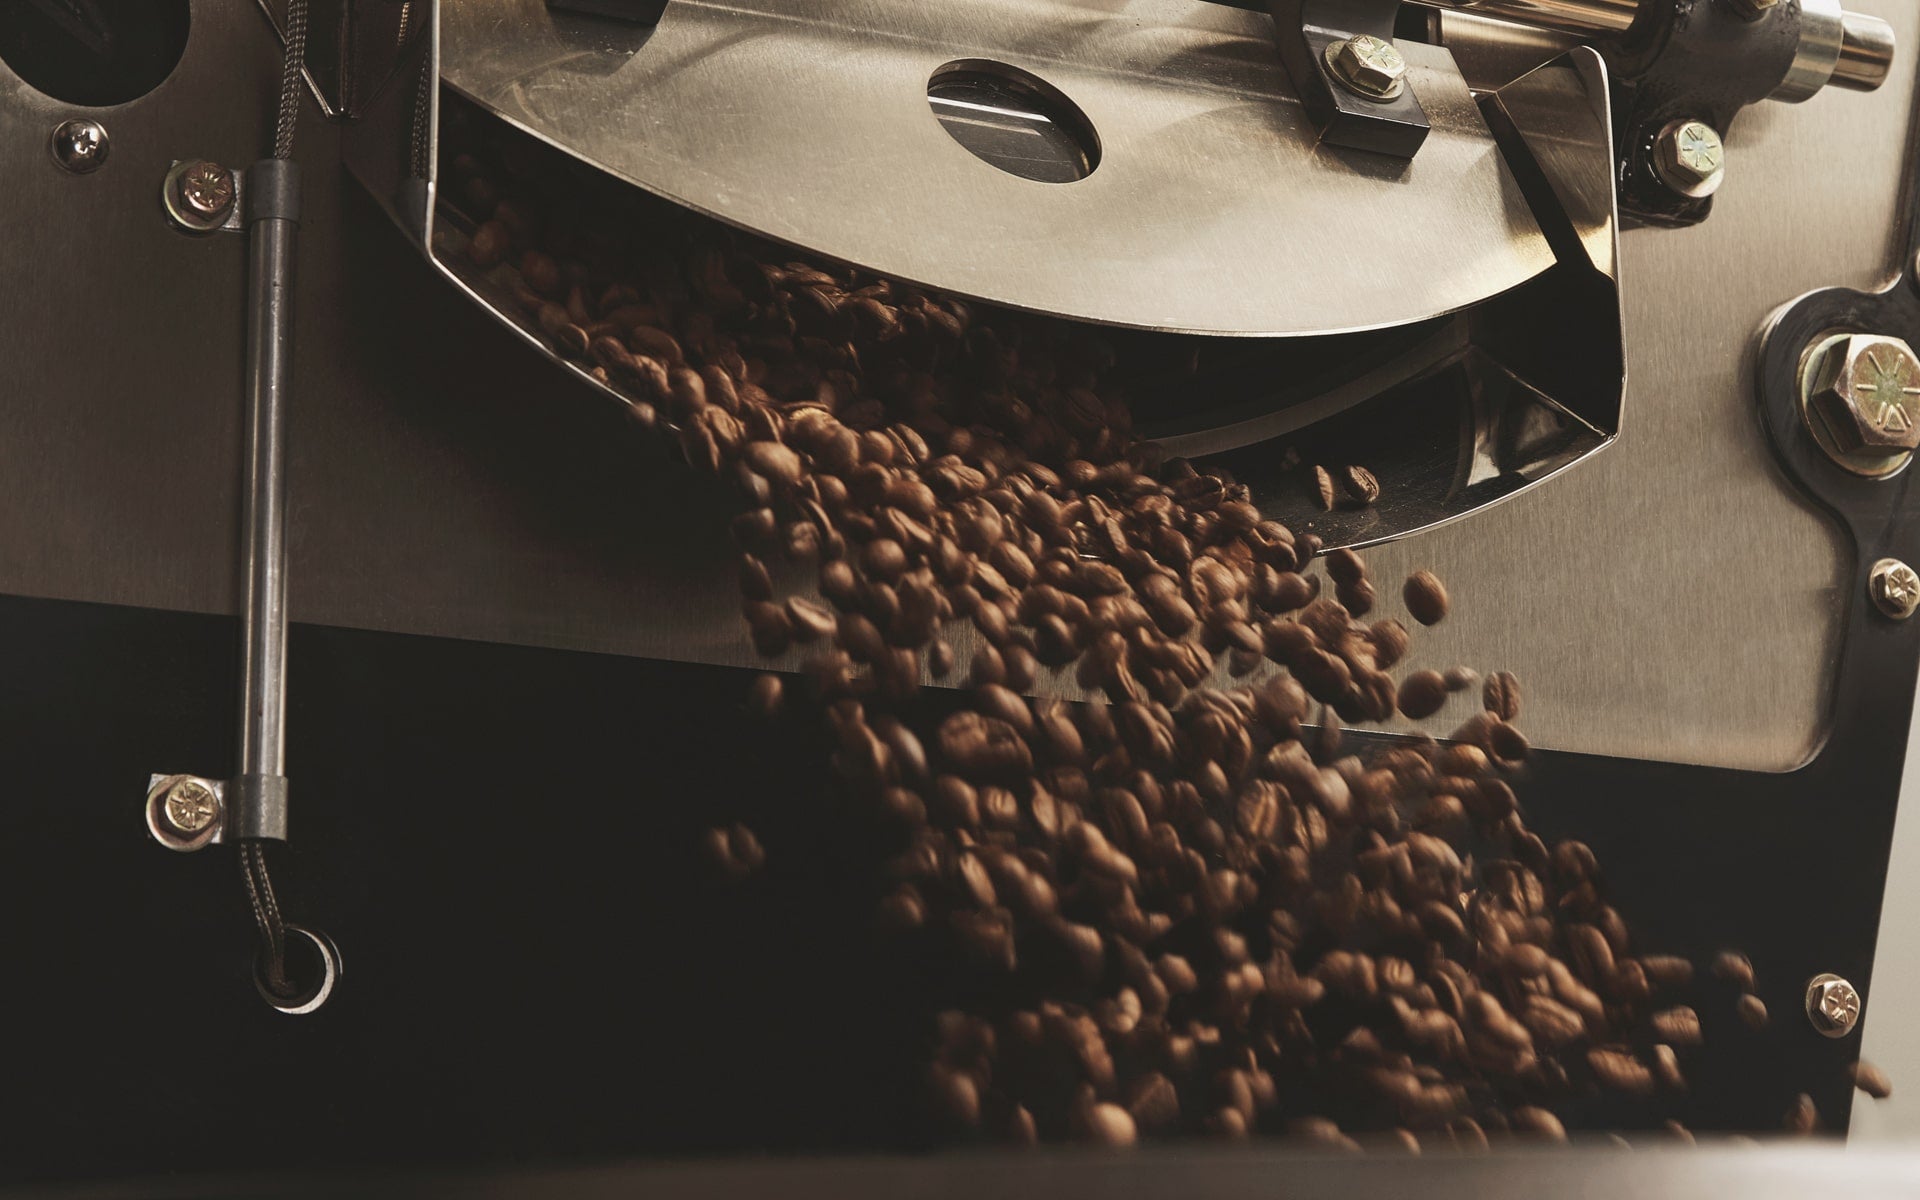 Victor Allen's Coffee Organic Peruvian, Medium Roast, 42 Count